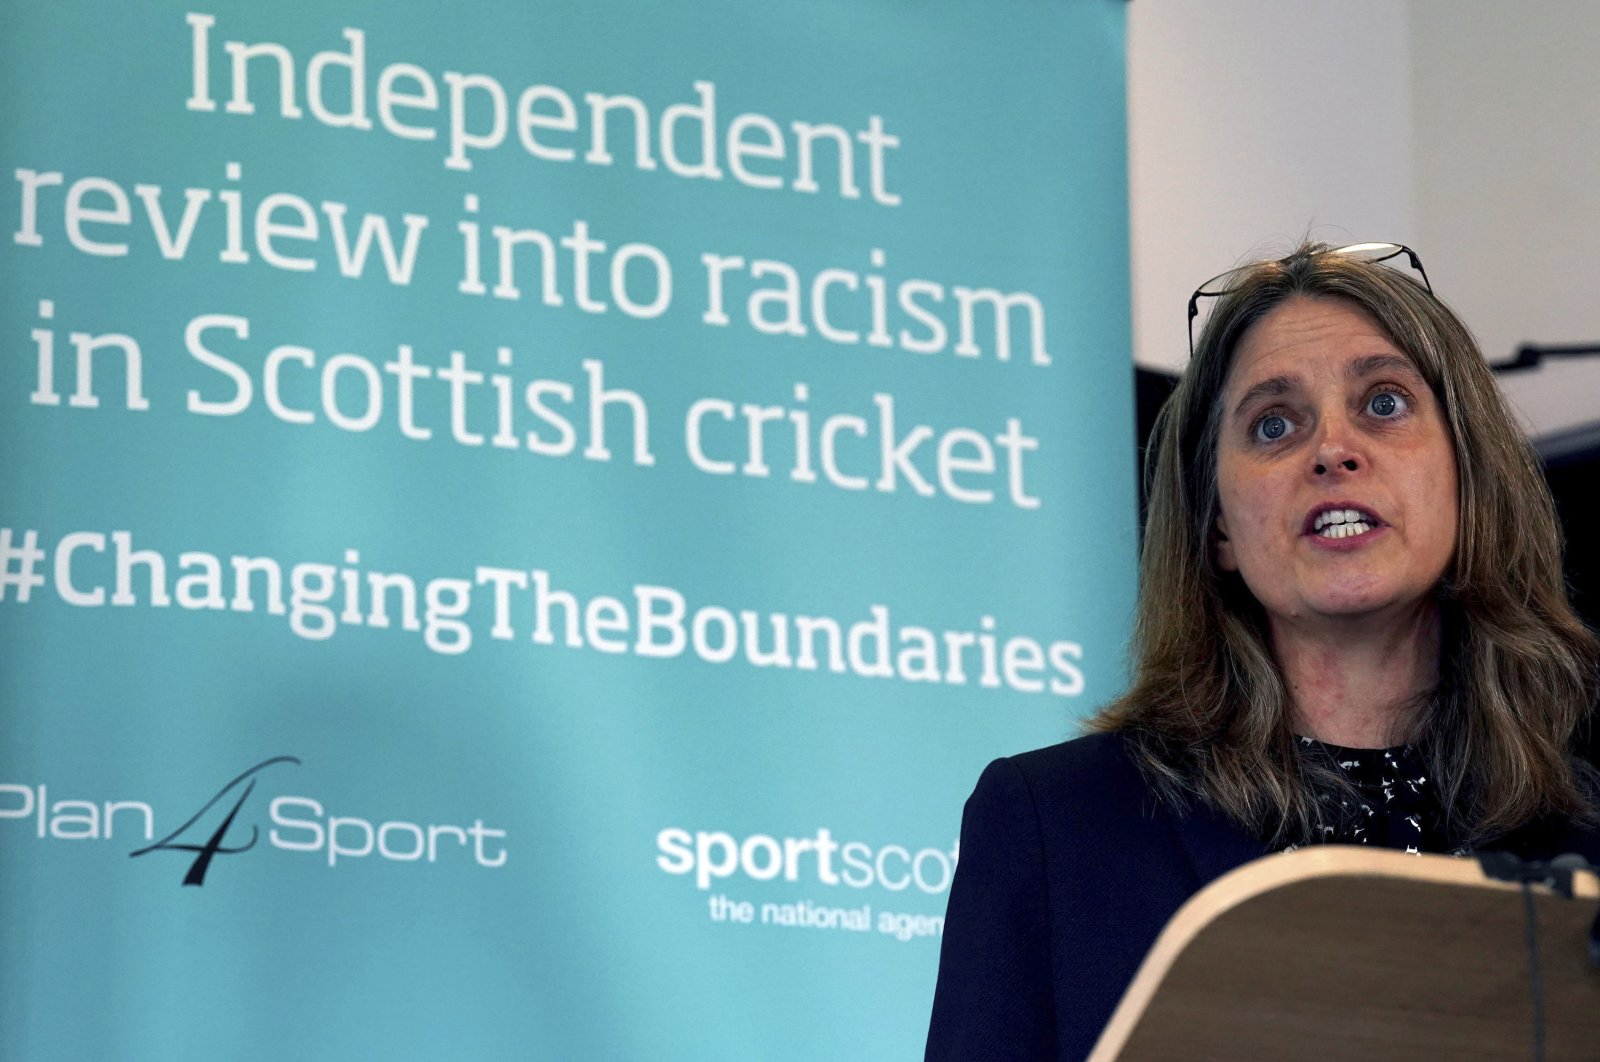 Penyelidikan independen menemukan Cricket Scotland ‘secara institusional rasis’